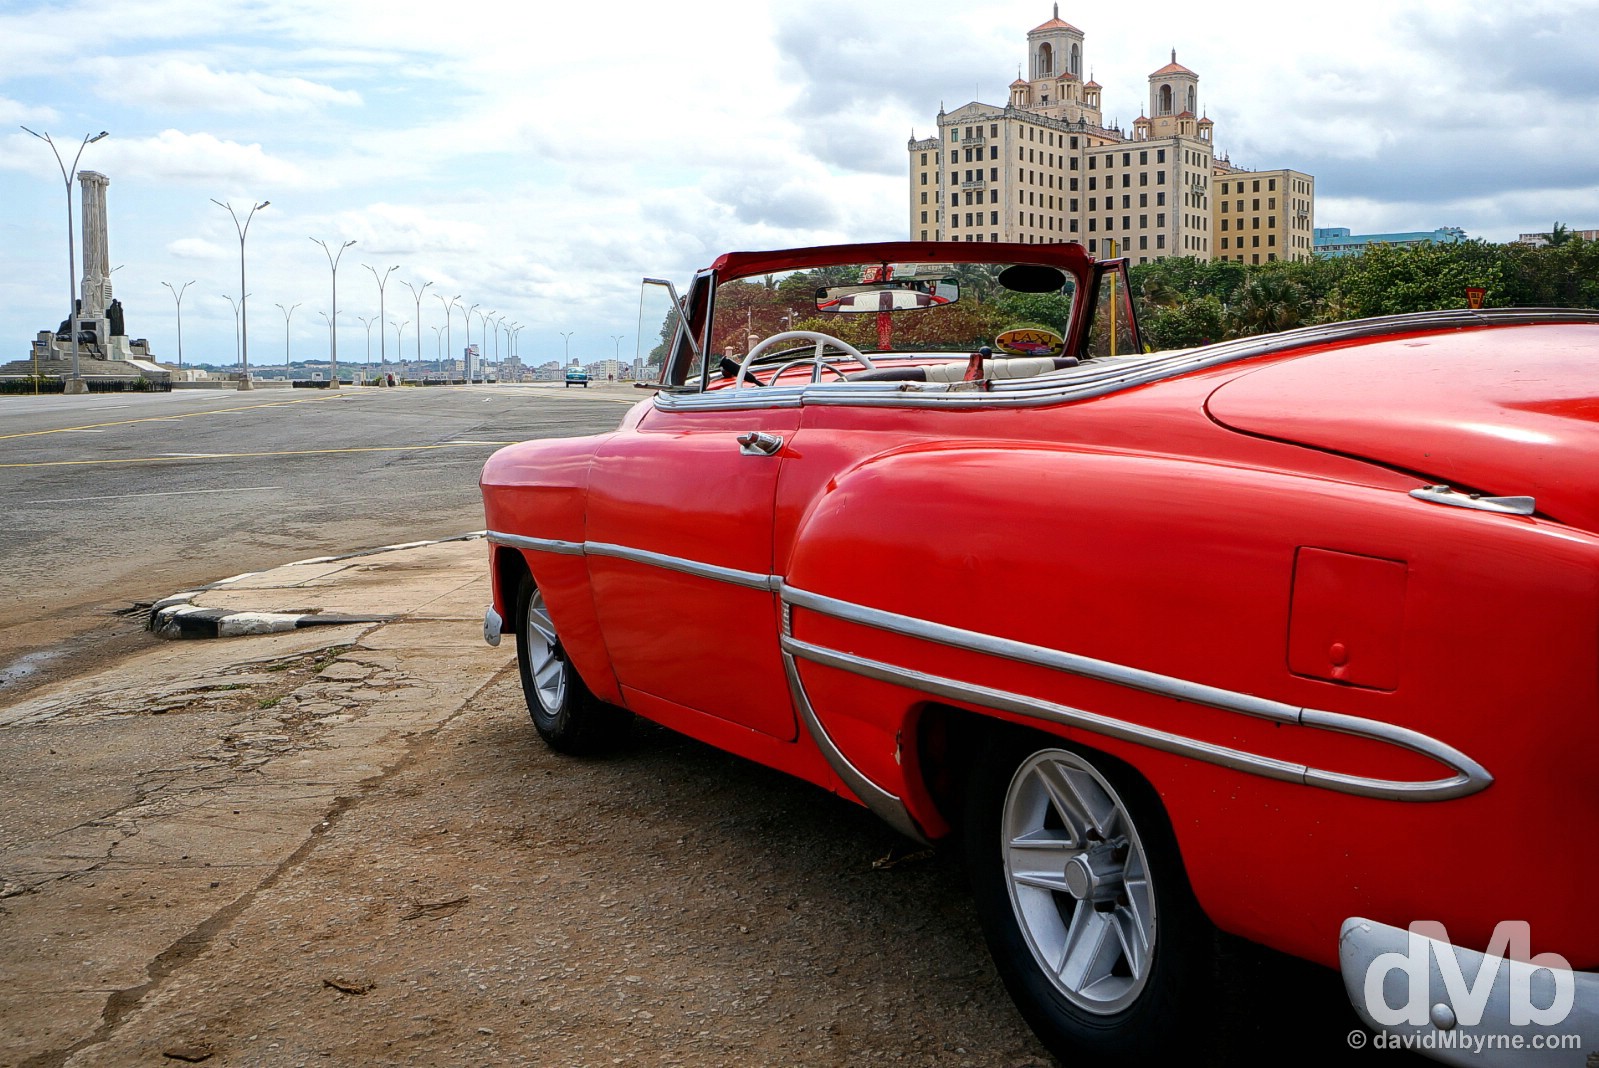 Down by the Malecon in Vedado, Havana, Cuba. May 1, 2015.